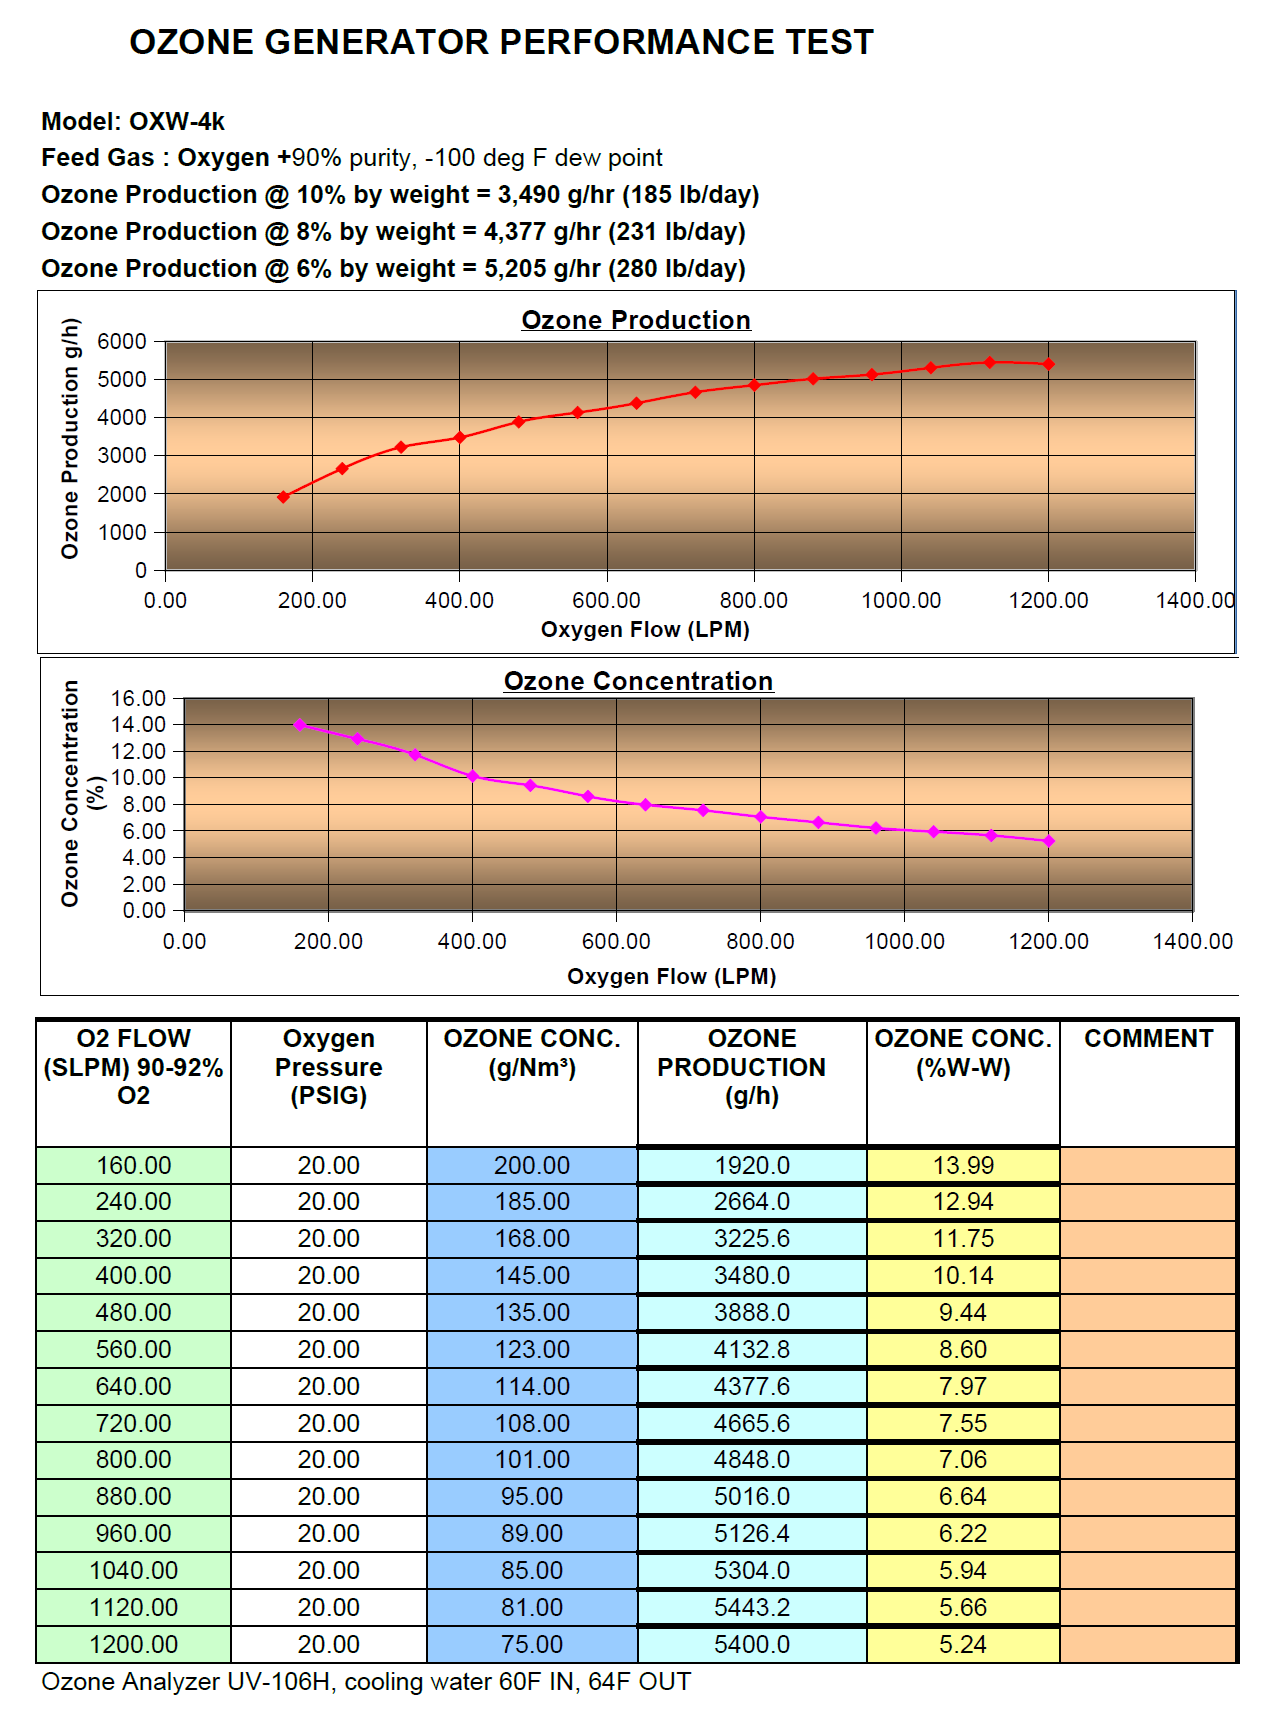 OXW-4k Ozone generator output chart